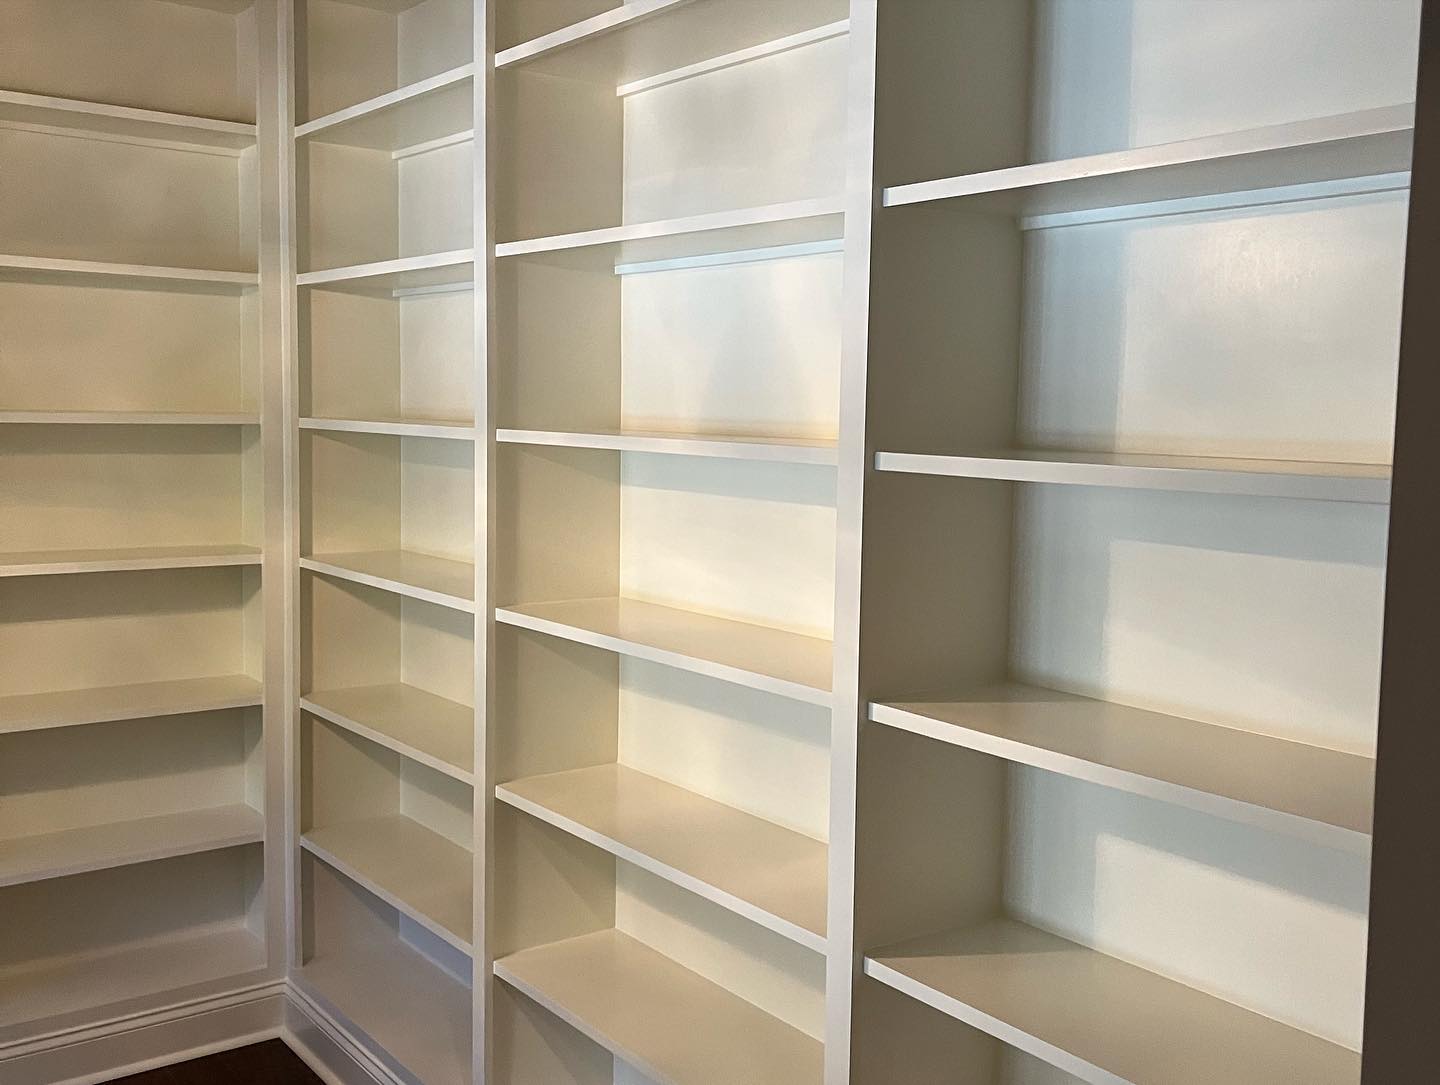 Custom Large Bookshelf Built in Cabinets Side View Row Shelf